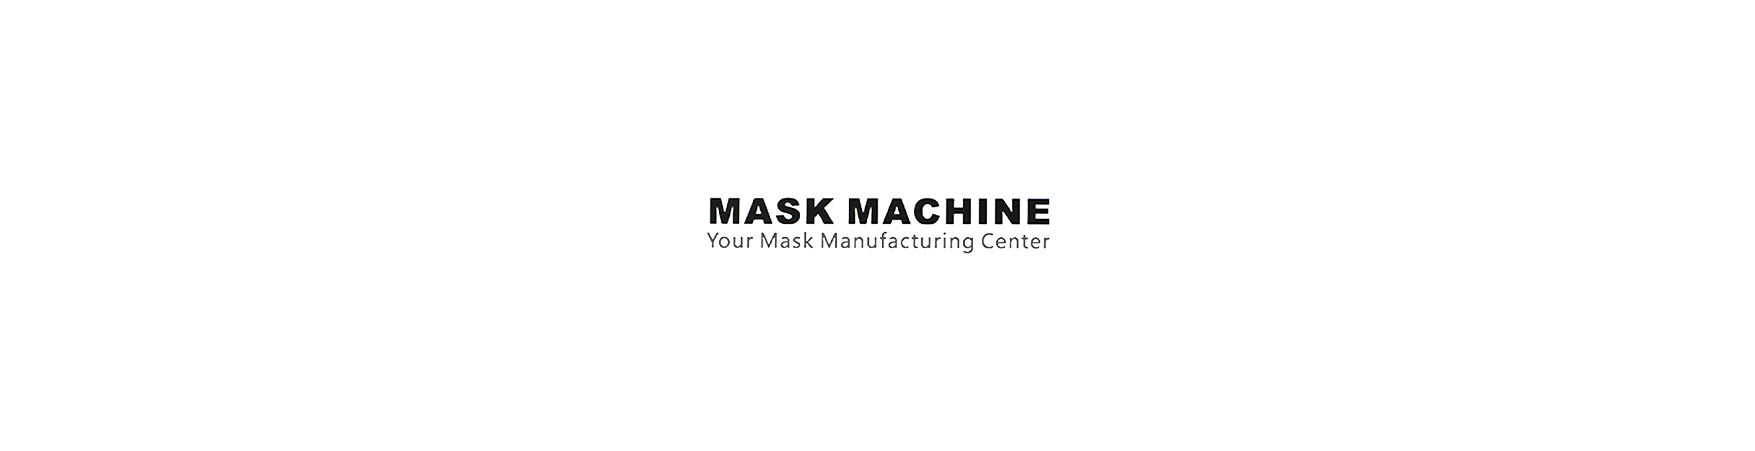 Mask Machine